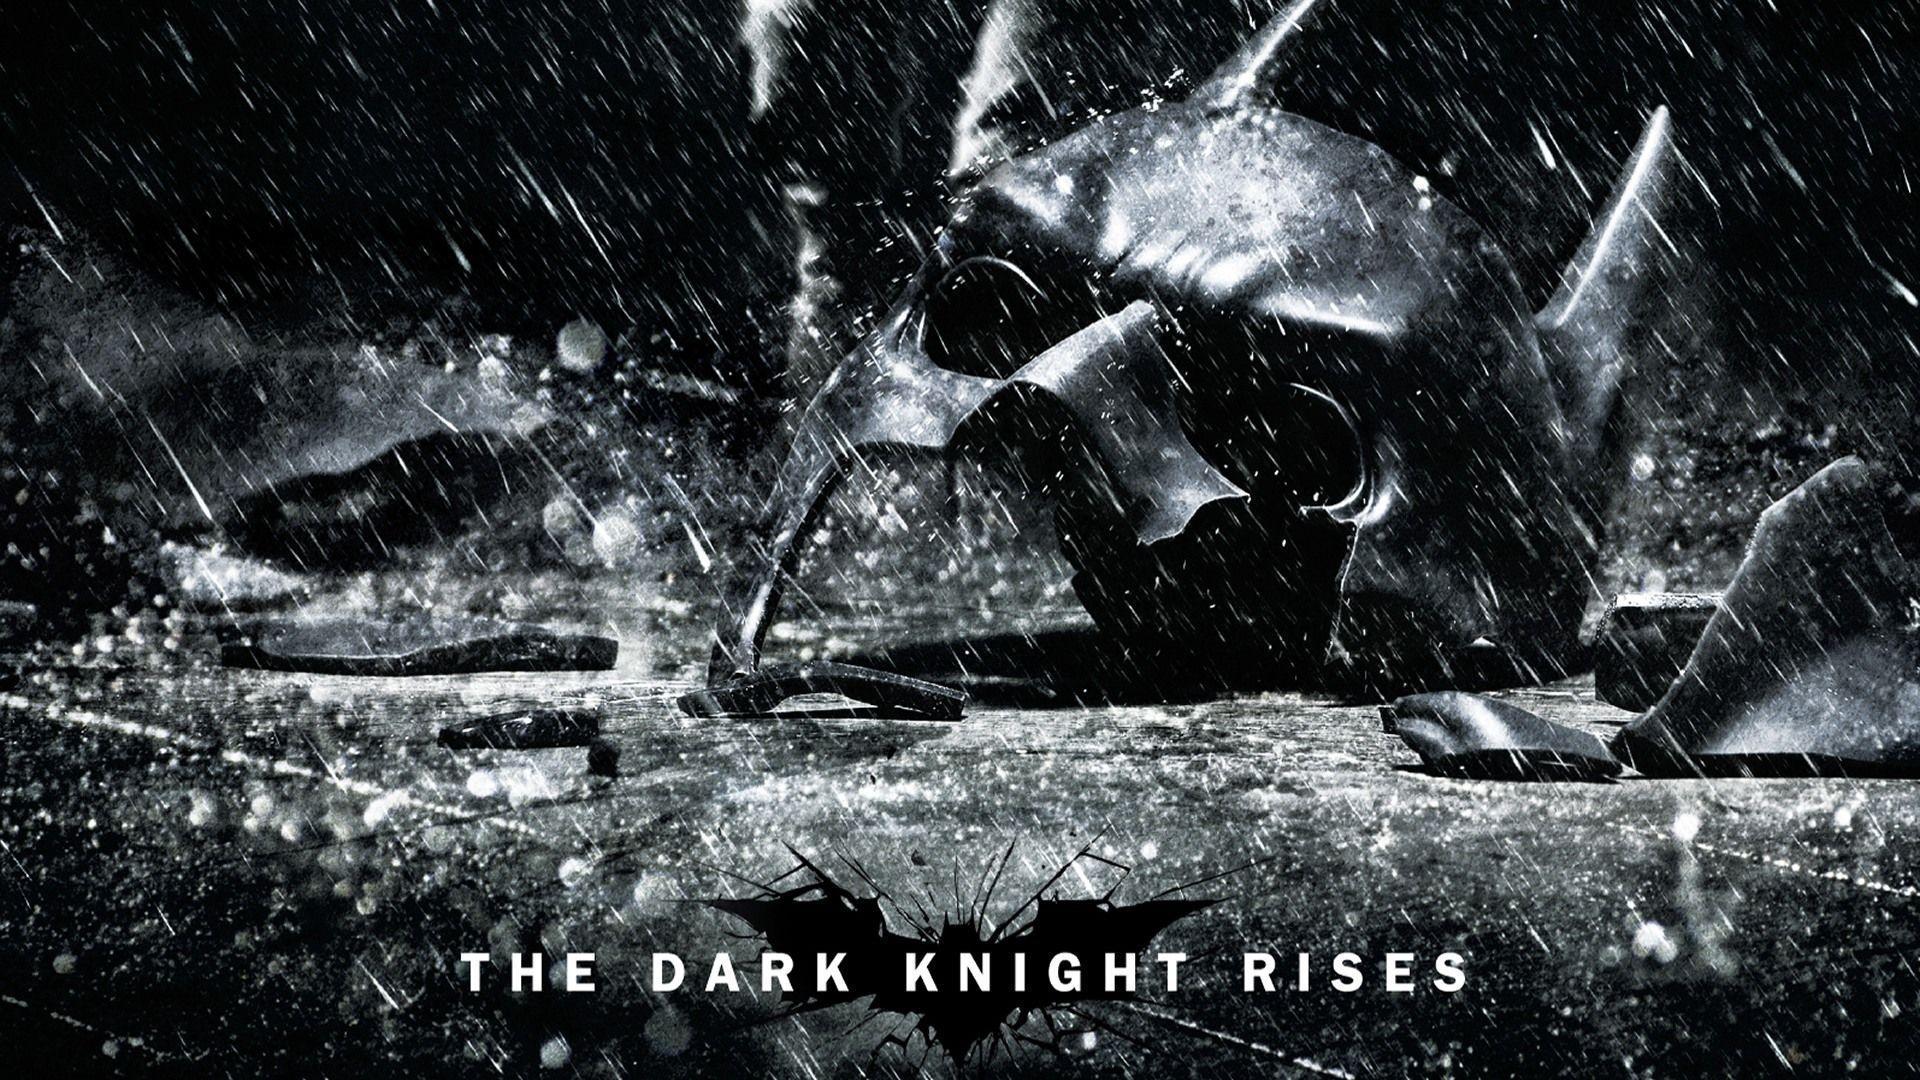 The Dark Knight Rises Alternate Reality Game